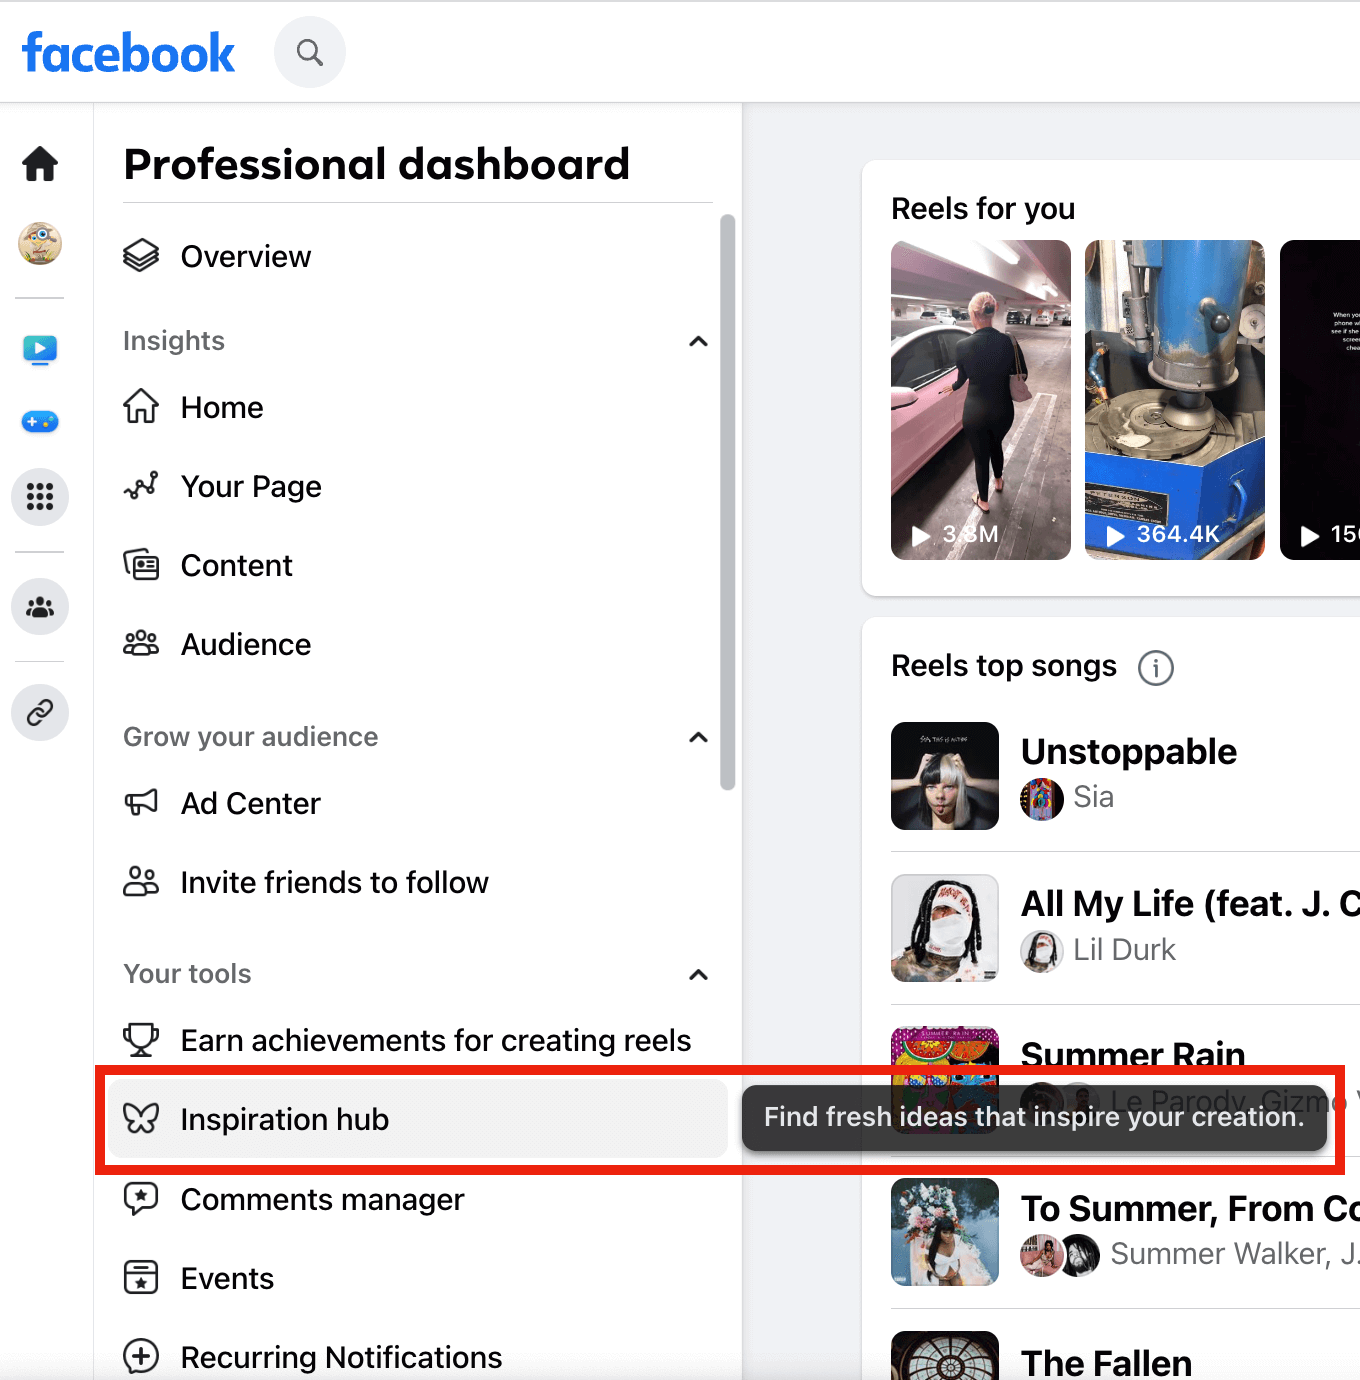 facebook-professional-dashboard-inspiration-hub